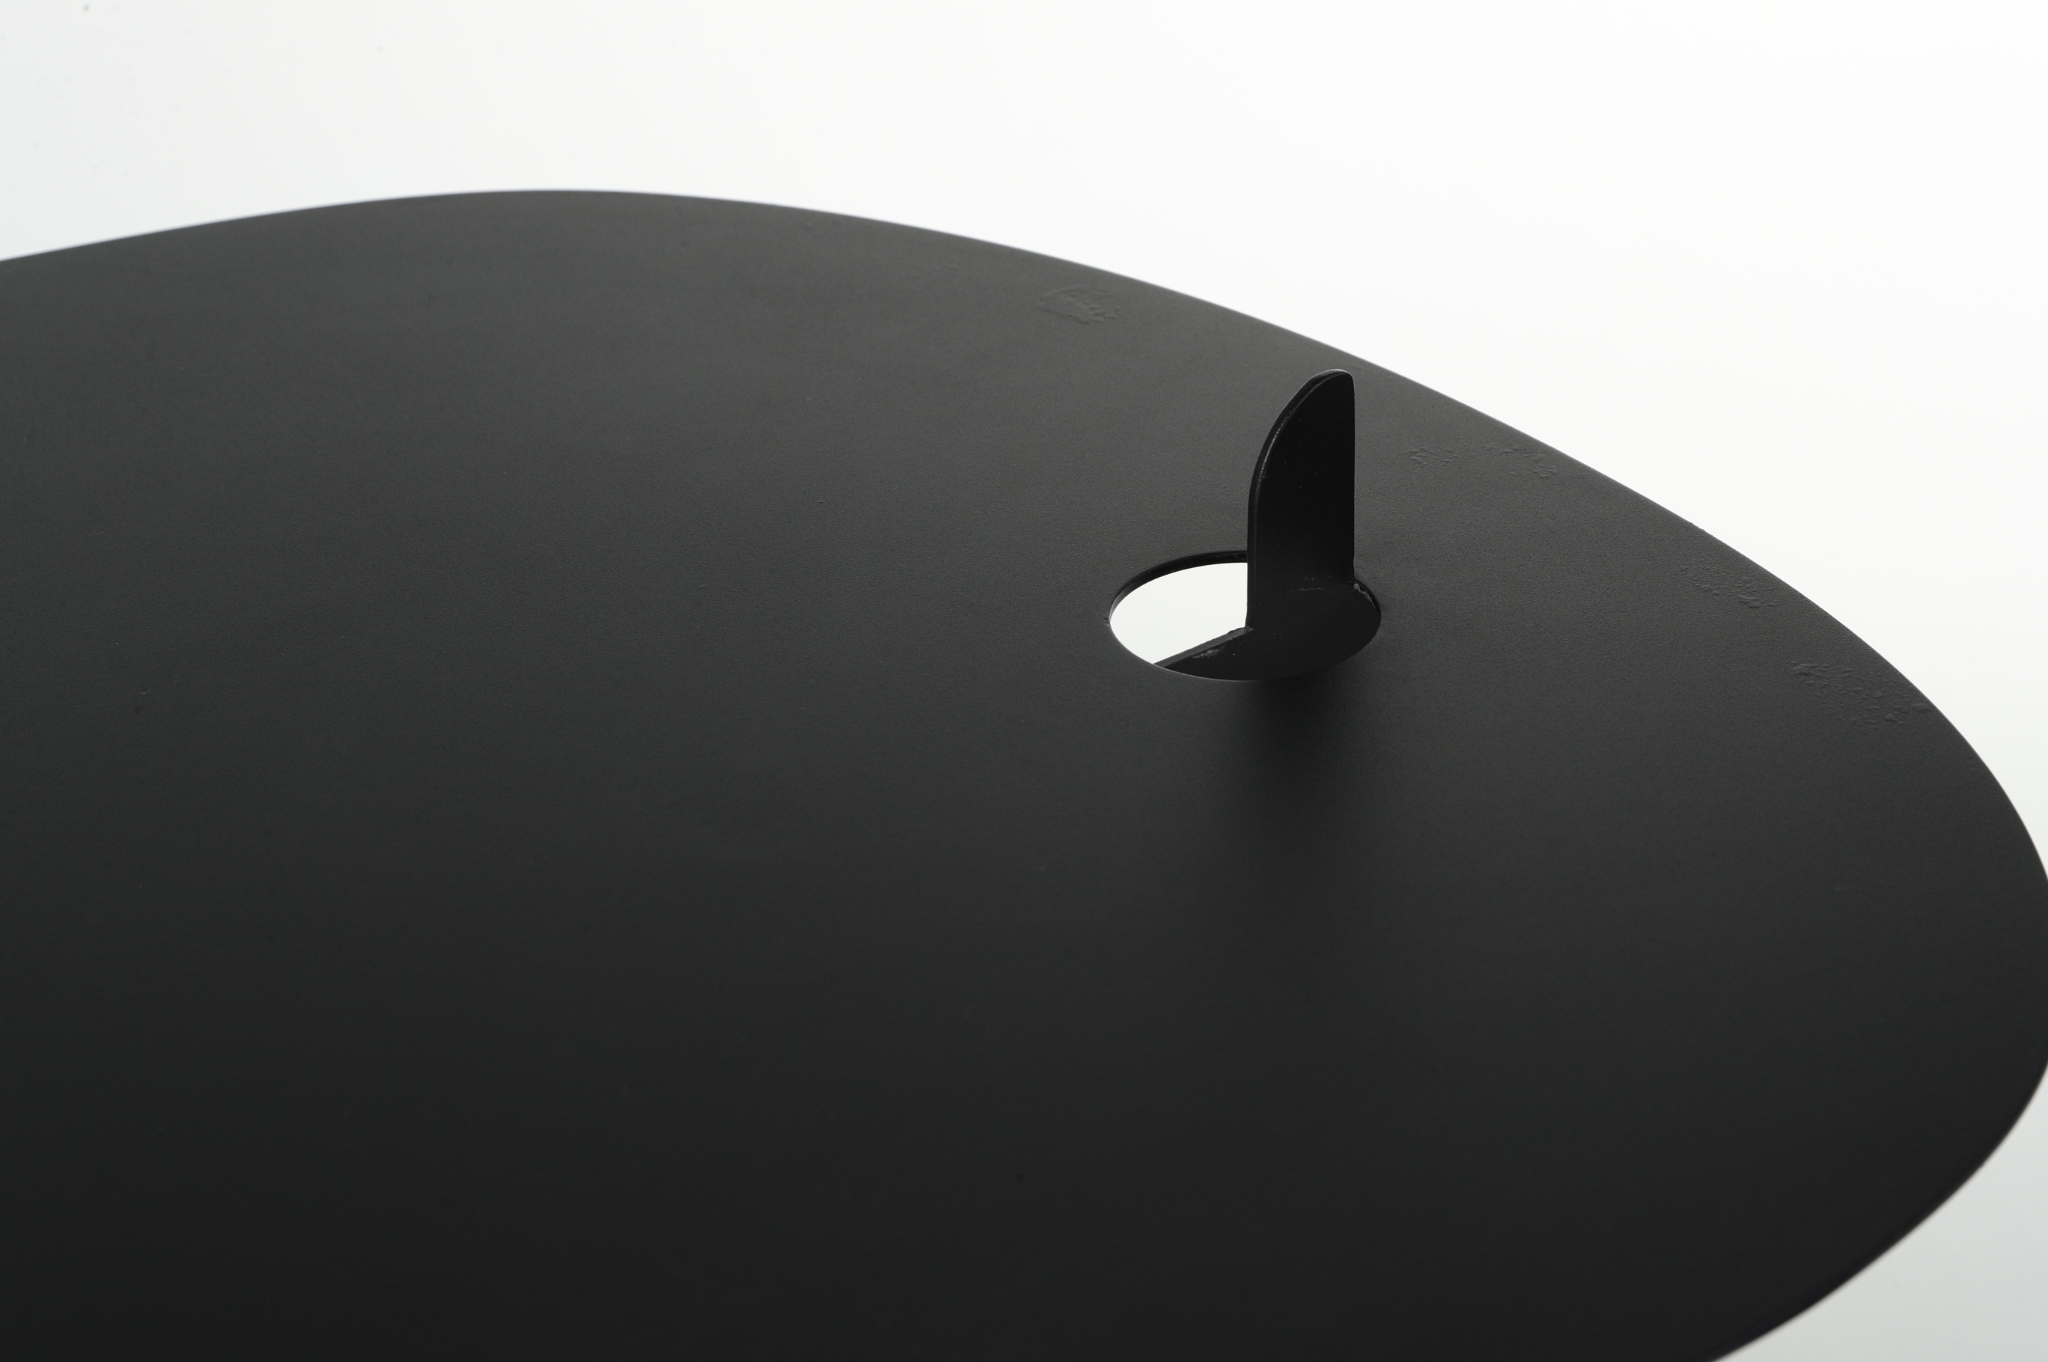 Black Mountain Furniture | Rothko coffee table